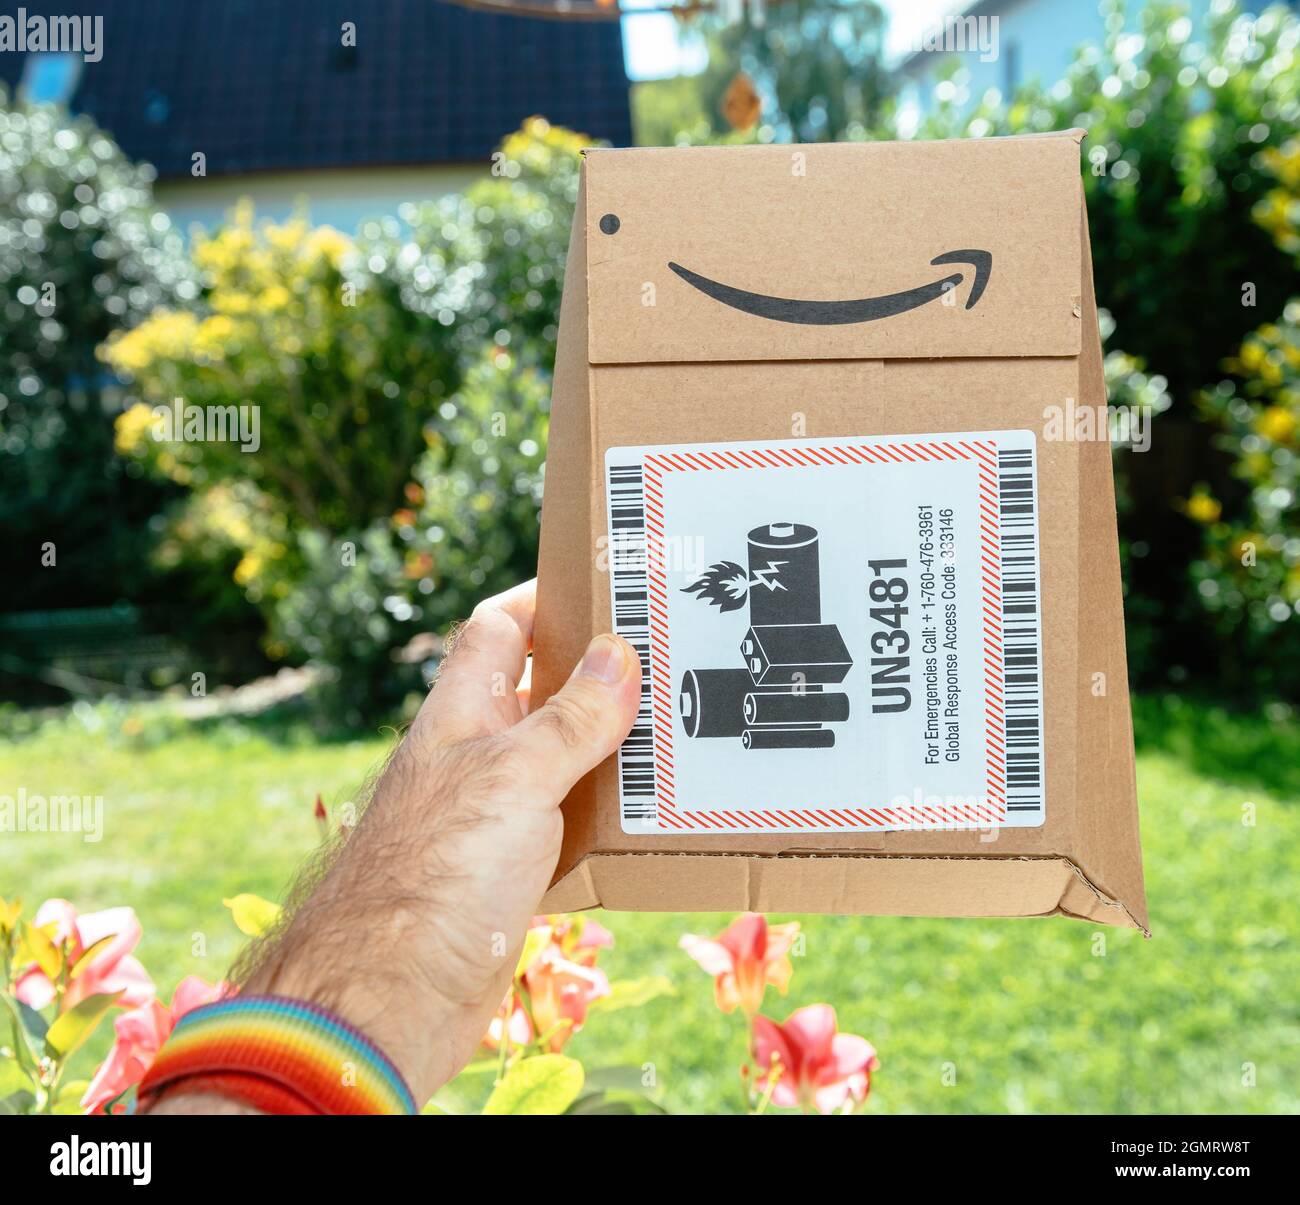 Verpackung von Amazon Prime Karton mit UN3481 Aufkleber Stockfotografie -  Alamy